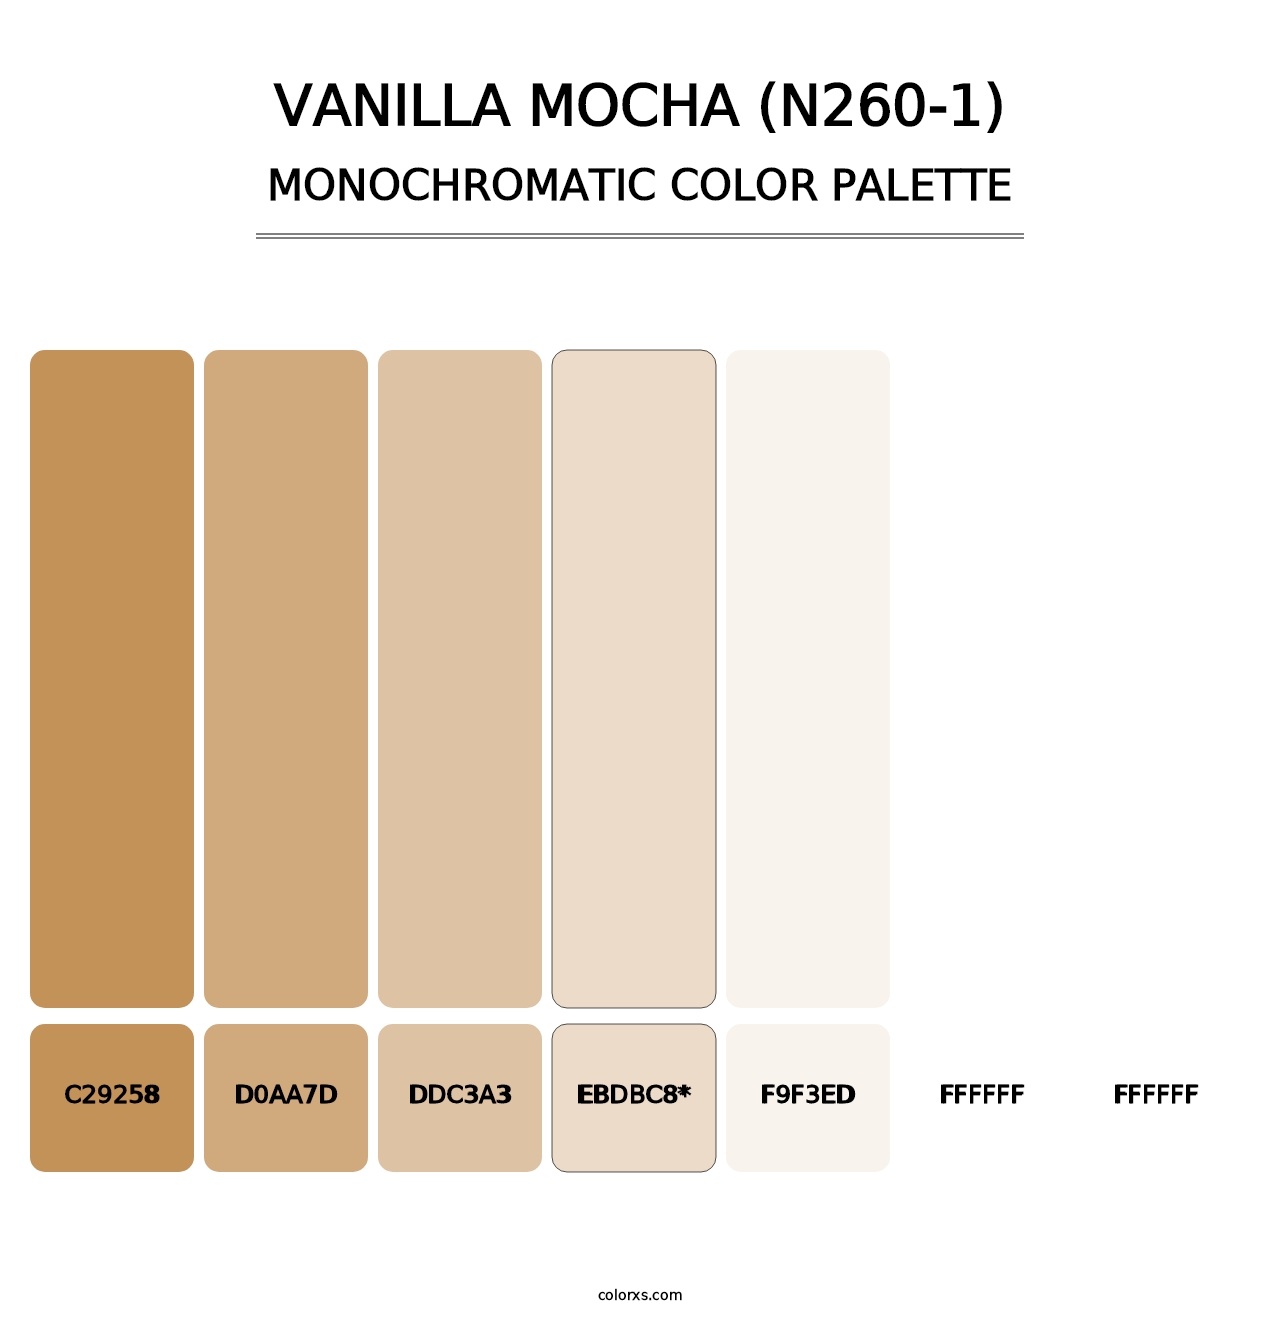 Vanilla Mocha (N260-1) - Monochromatic Color Palette